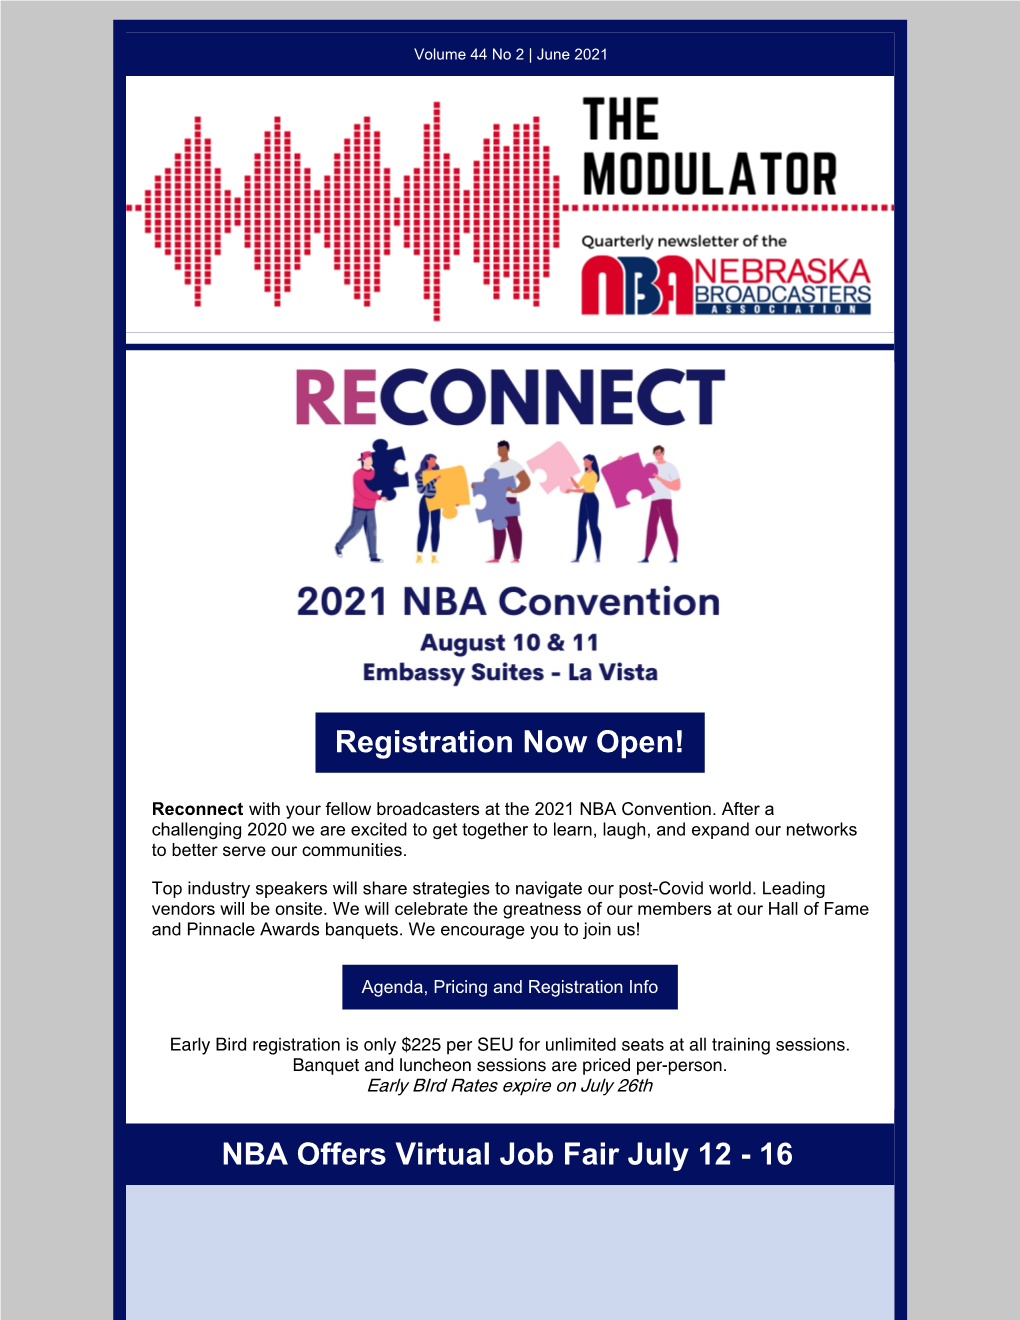 Registration Now Open! NBA Offers Virtual Job Fair July 12